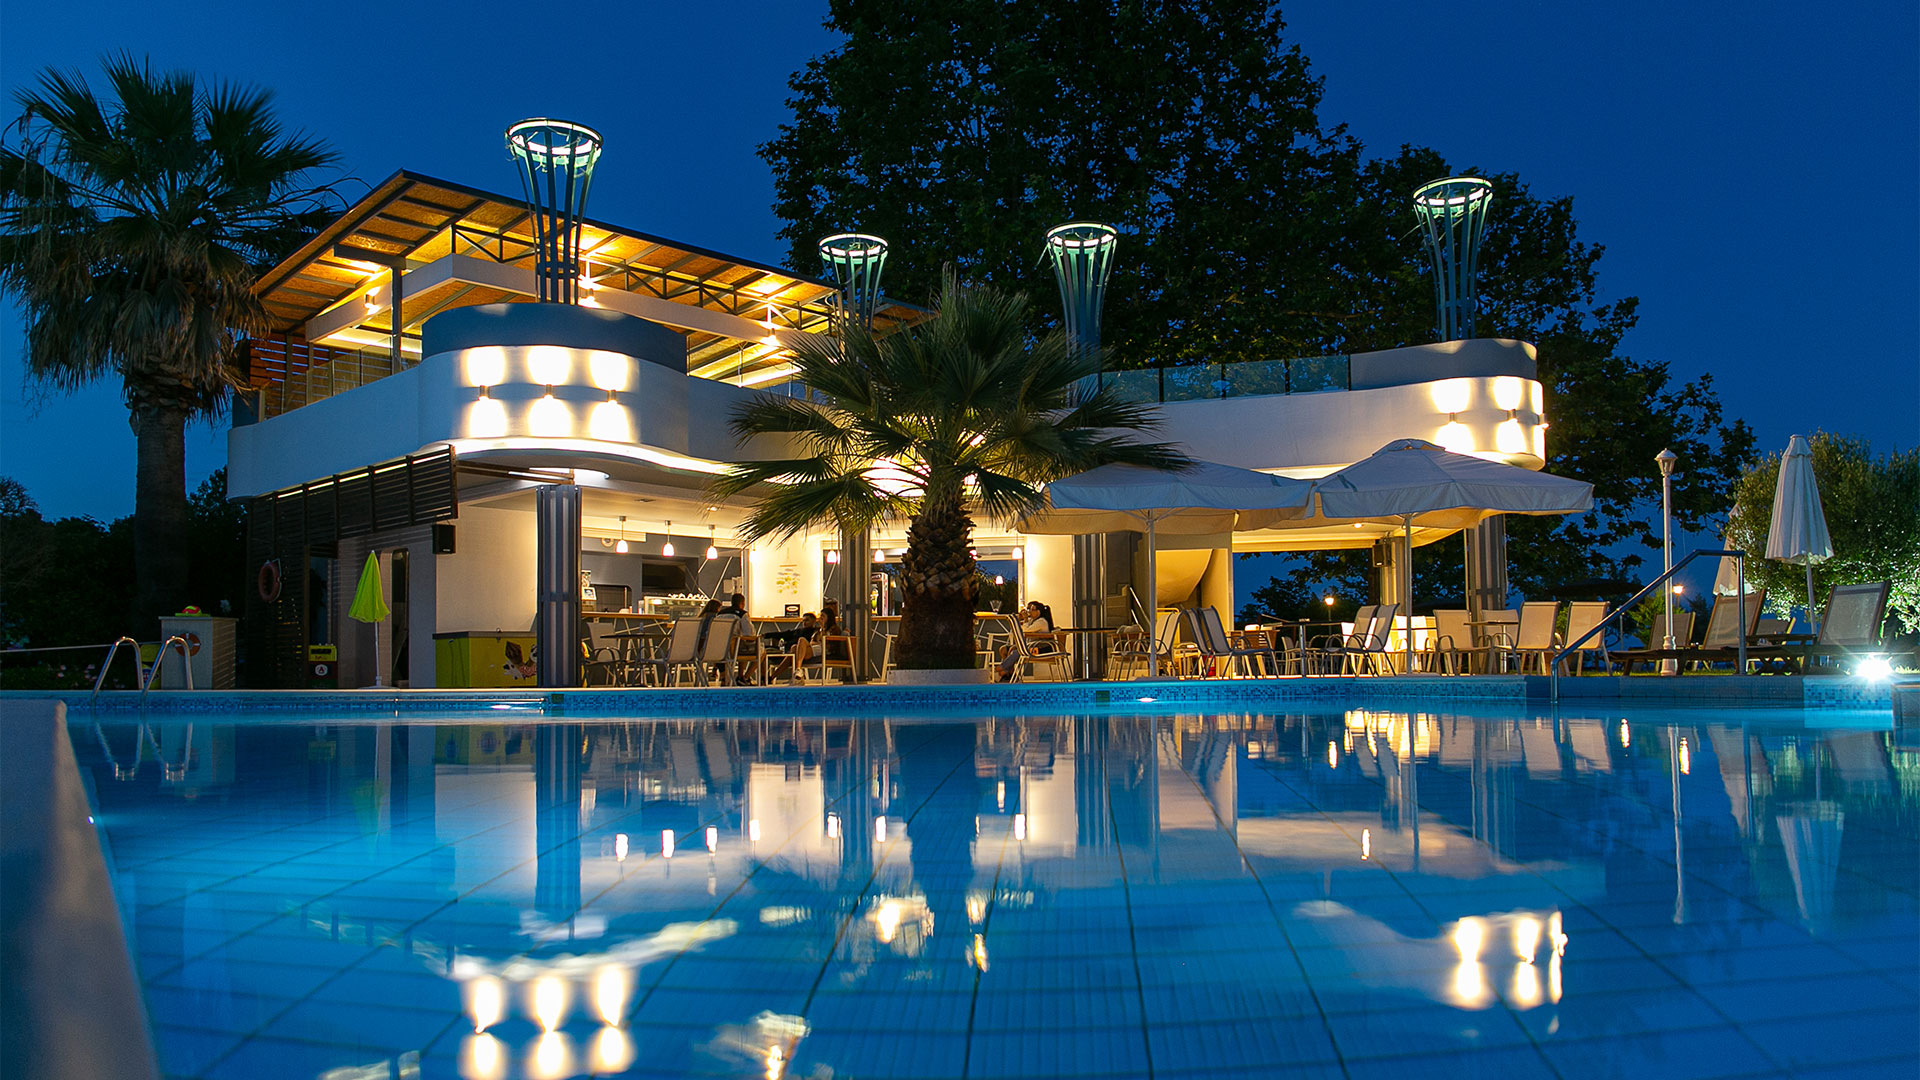 Hotel Anais pool bar.jpg